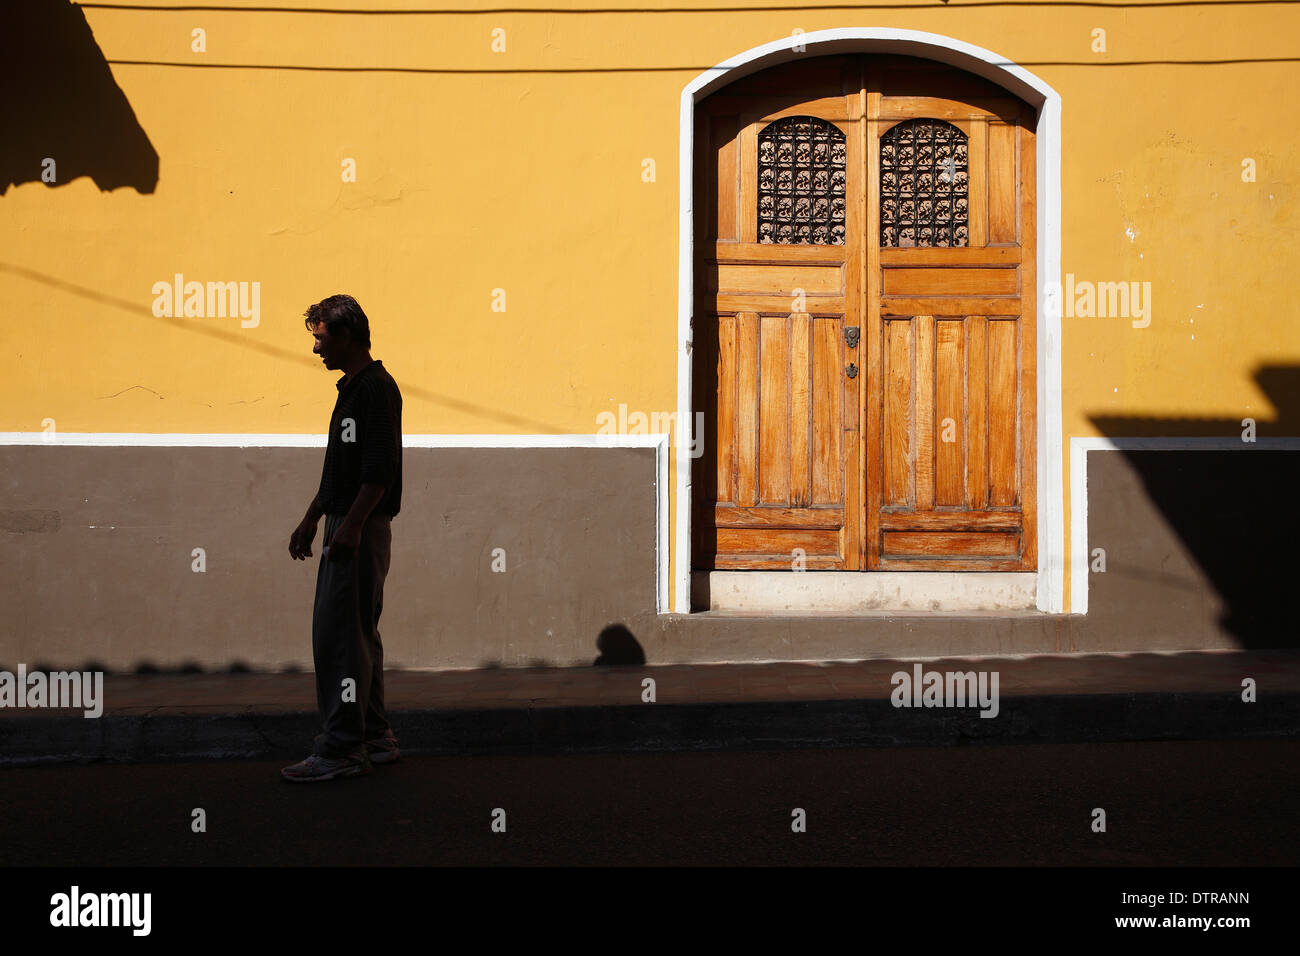 Case colorate facciate street scene Granada Nicaragua Foto Stock